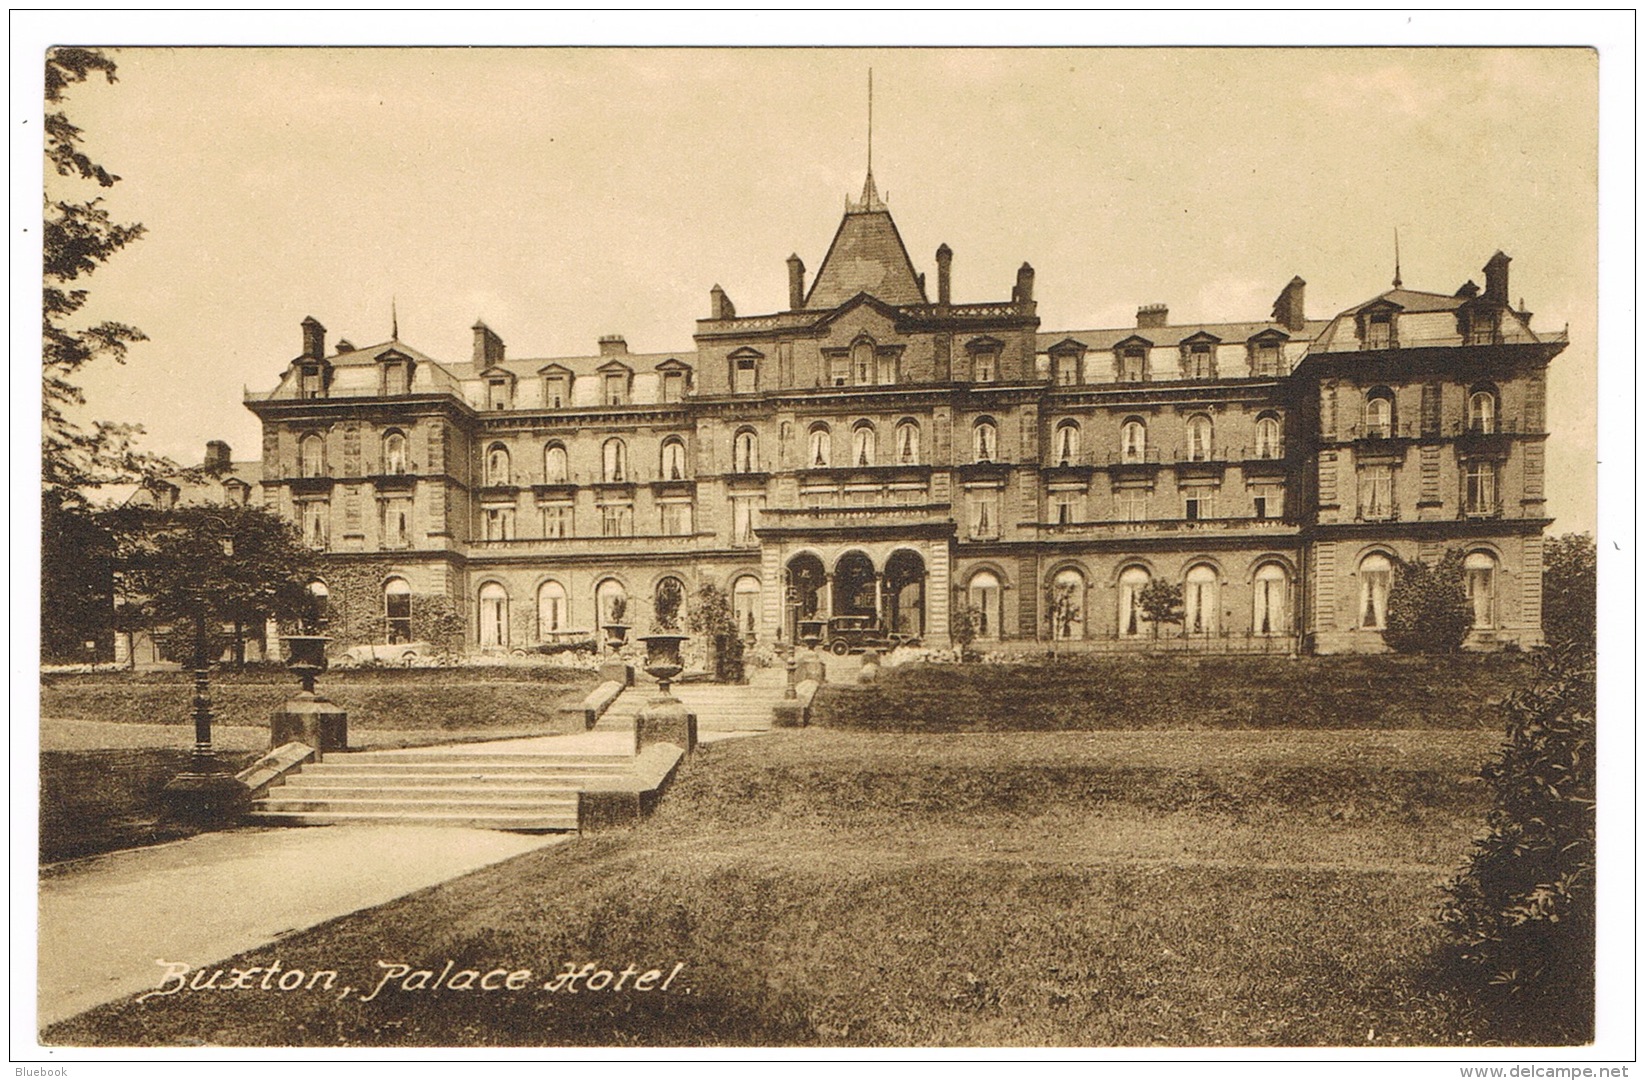 RB 1138 - Early Postcard - Buxton Palace Hotel - Derbyshire Peak District - Derbyshire